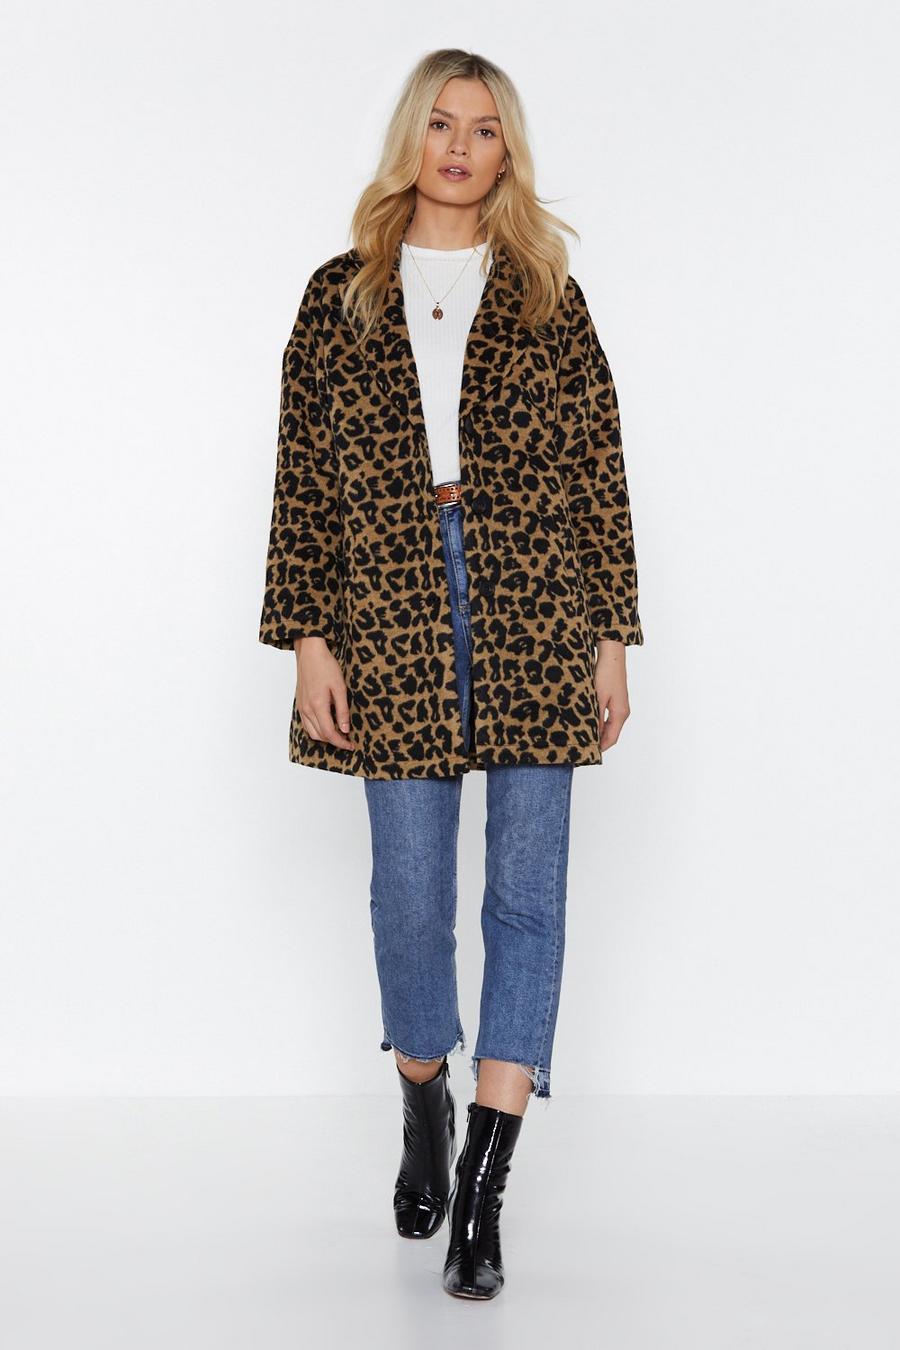 This Ones Fur You Leopard Coat